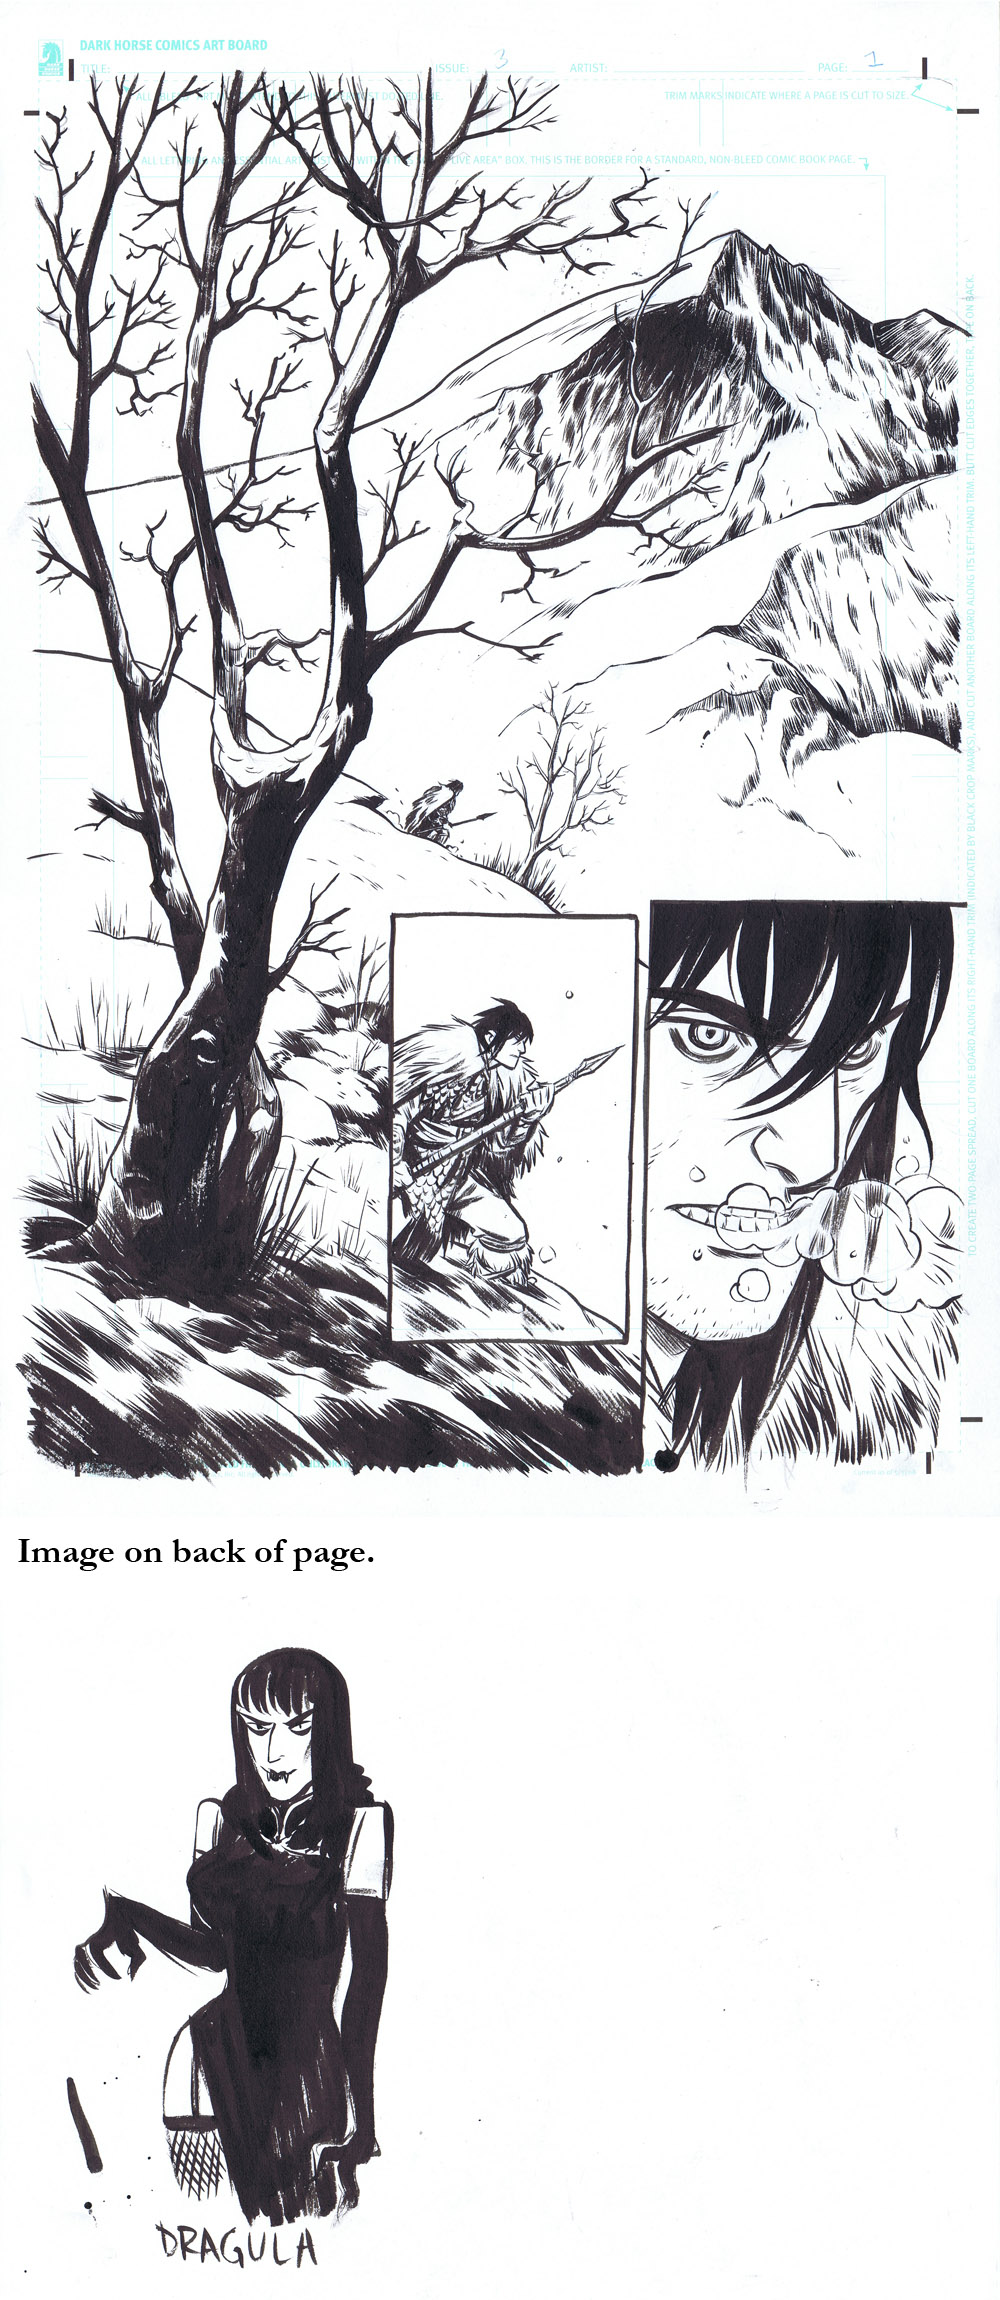 Conan the Barbarian #3 - page 01